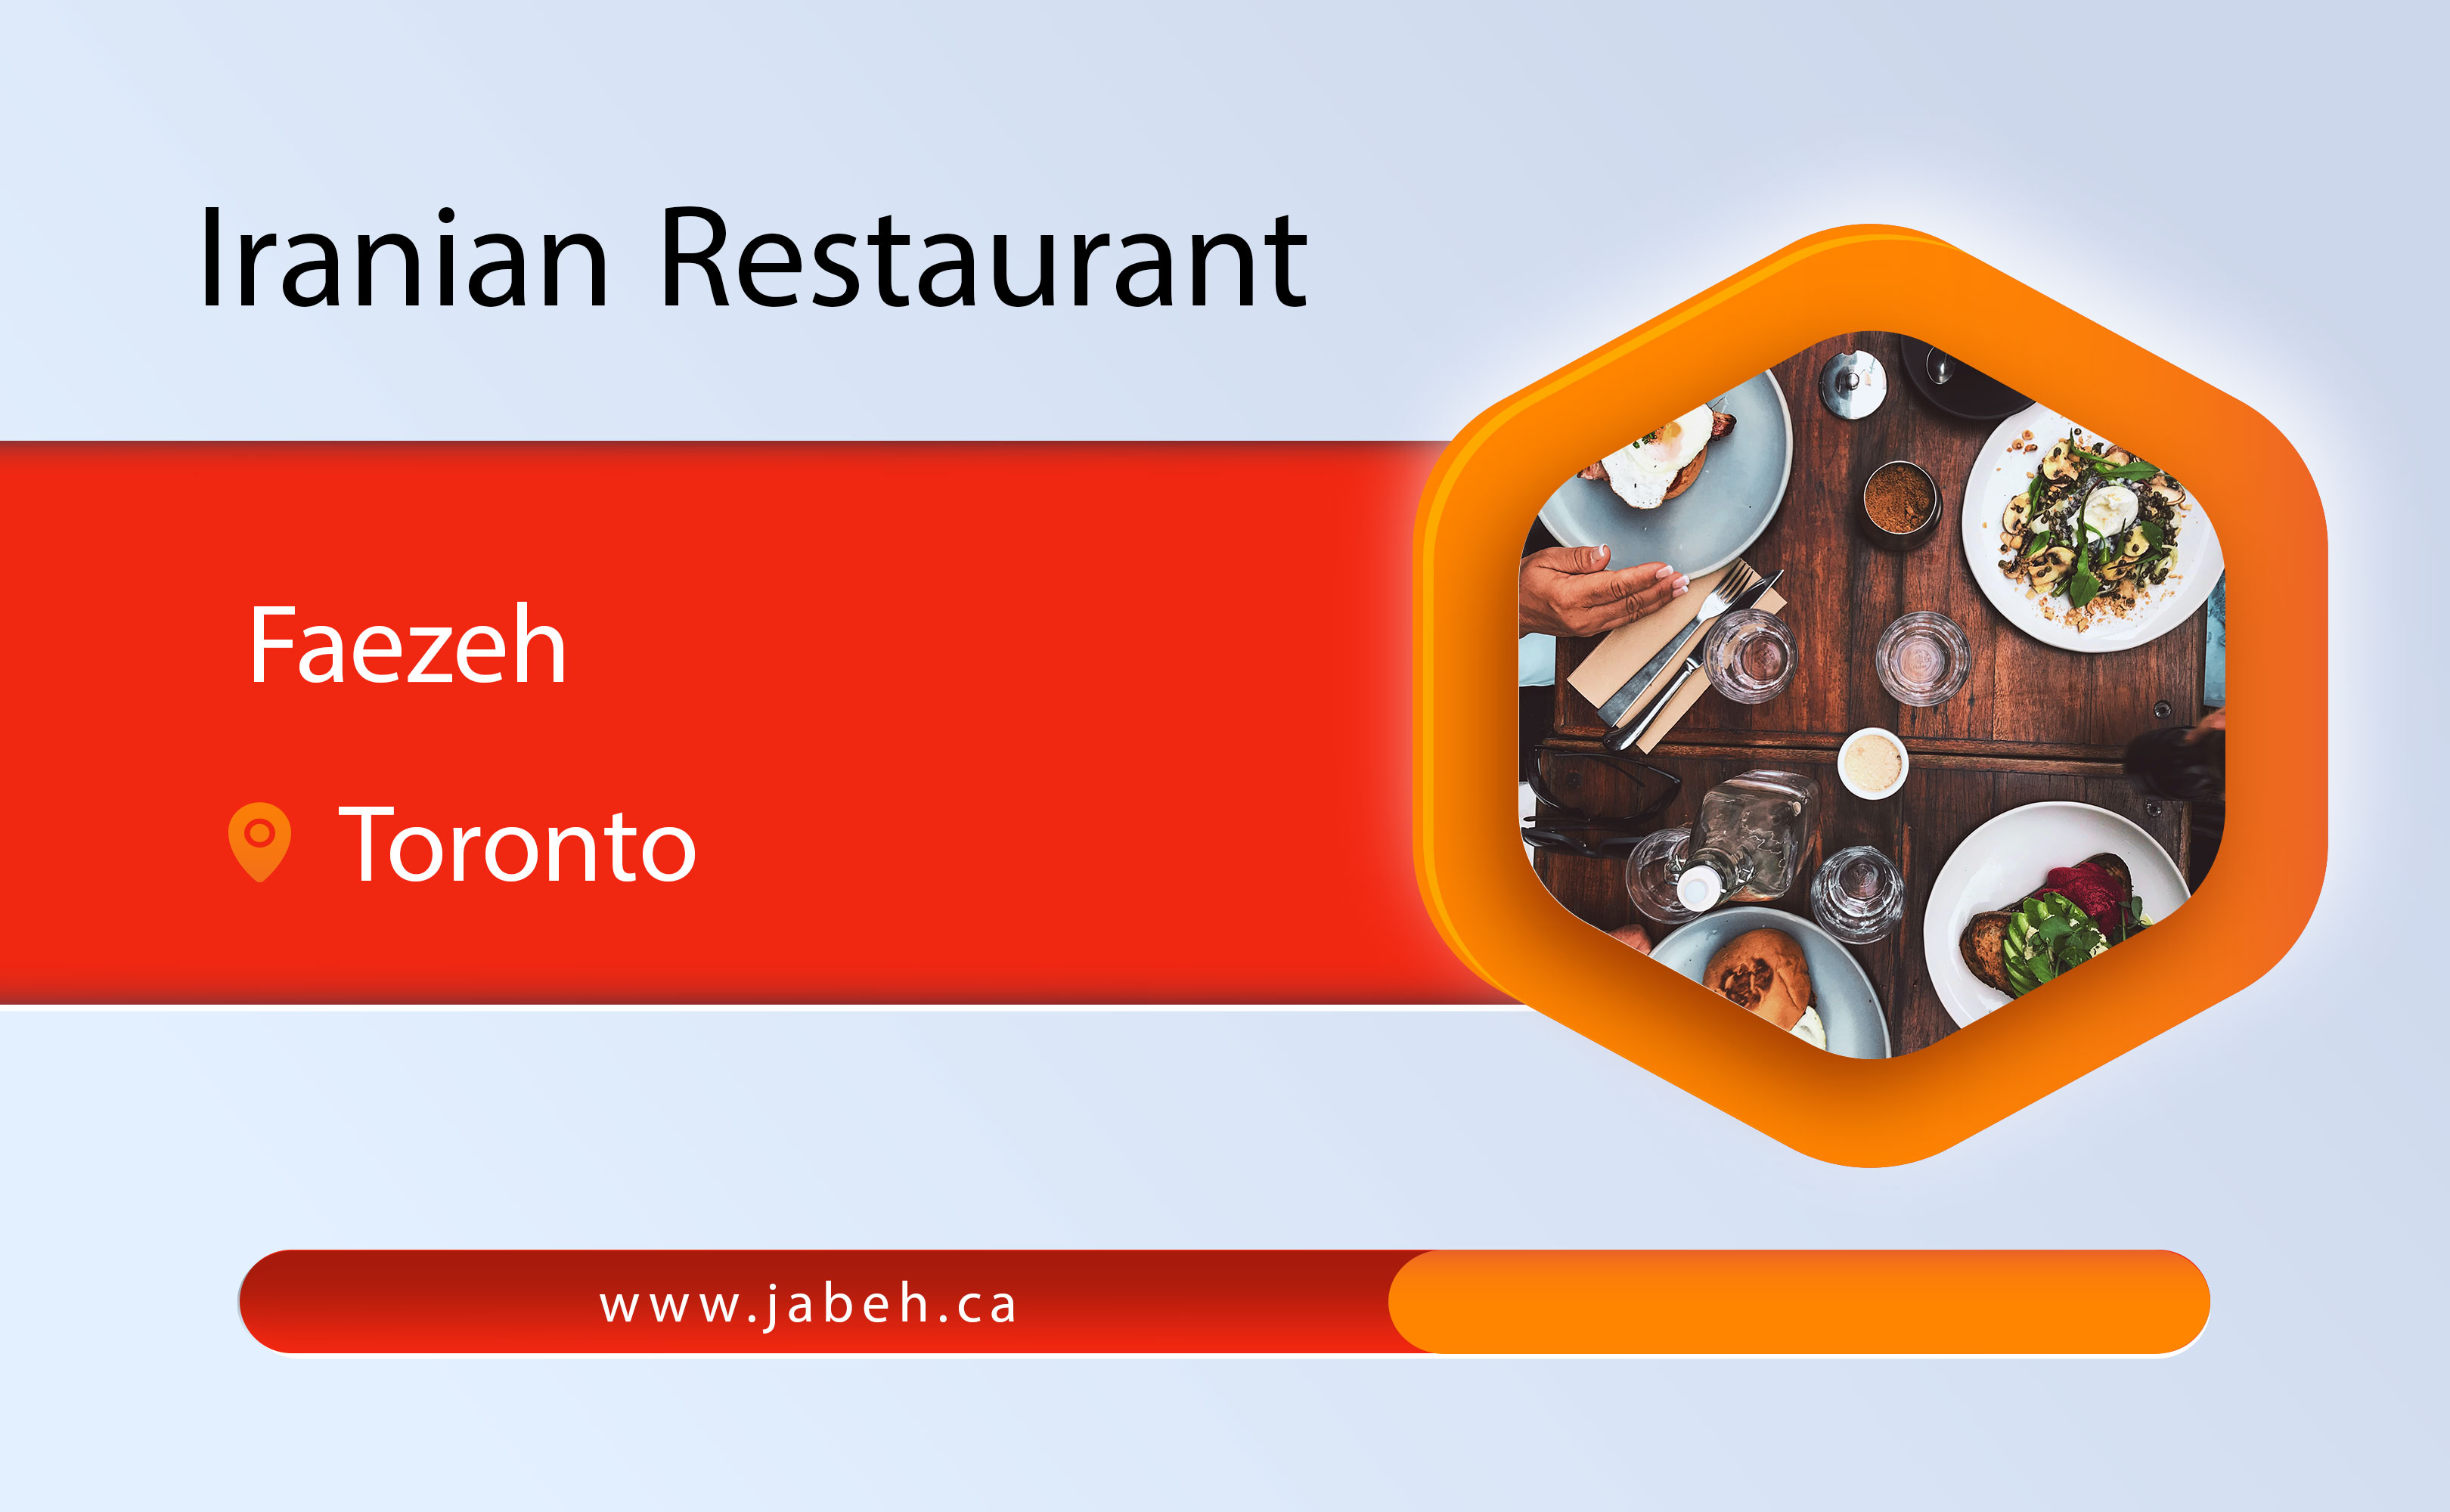 Faezeh Iranian restaurant in Toronto